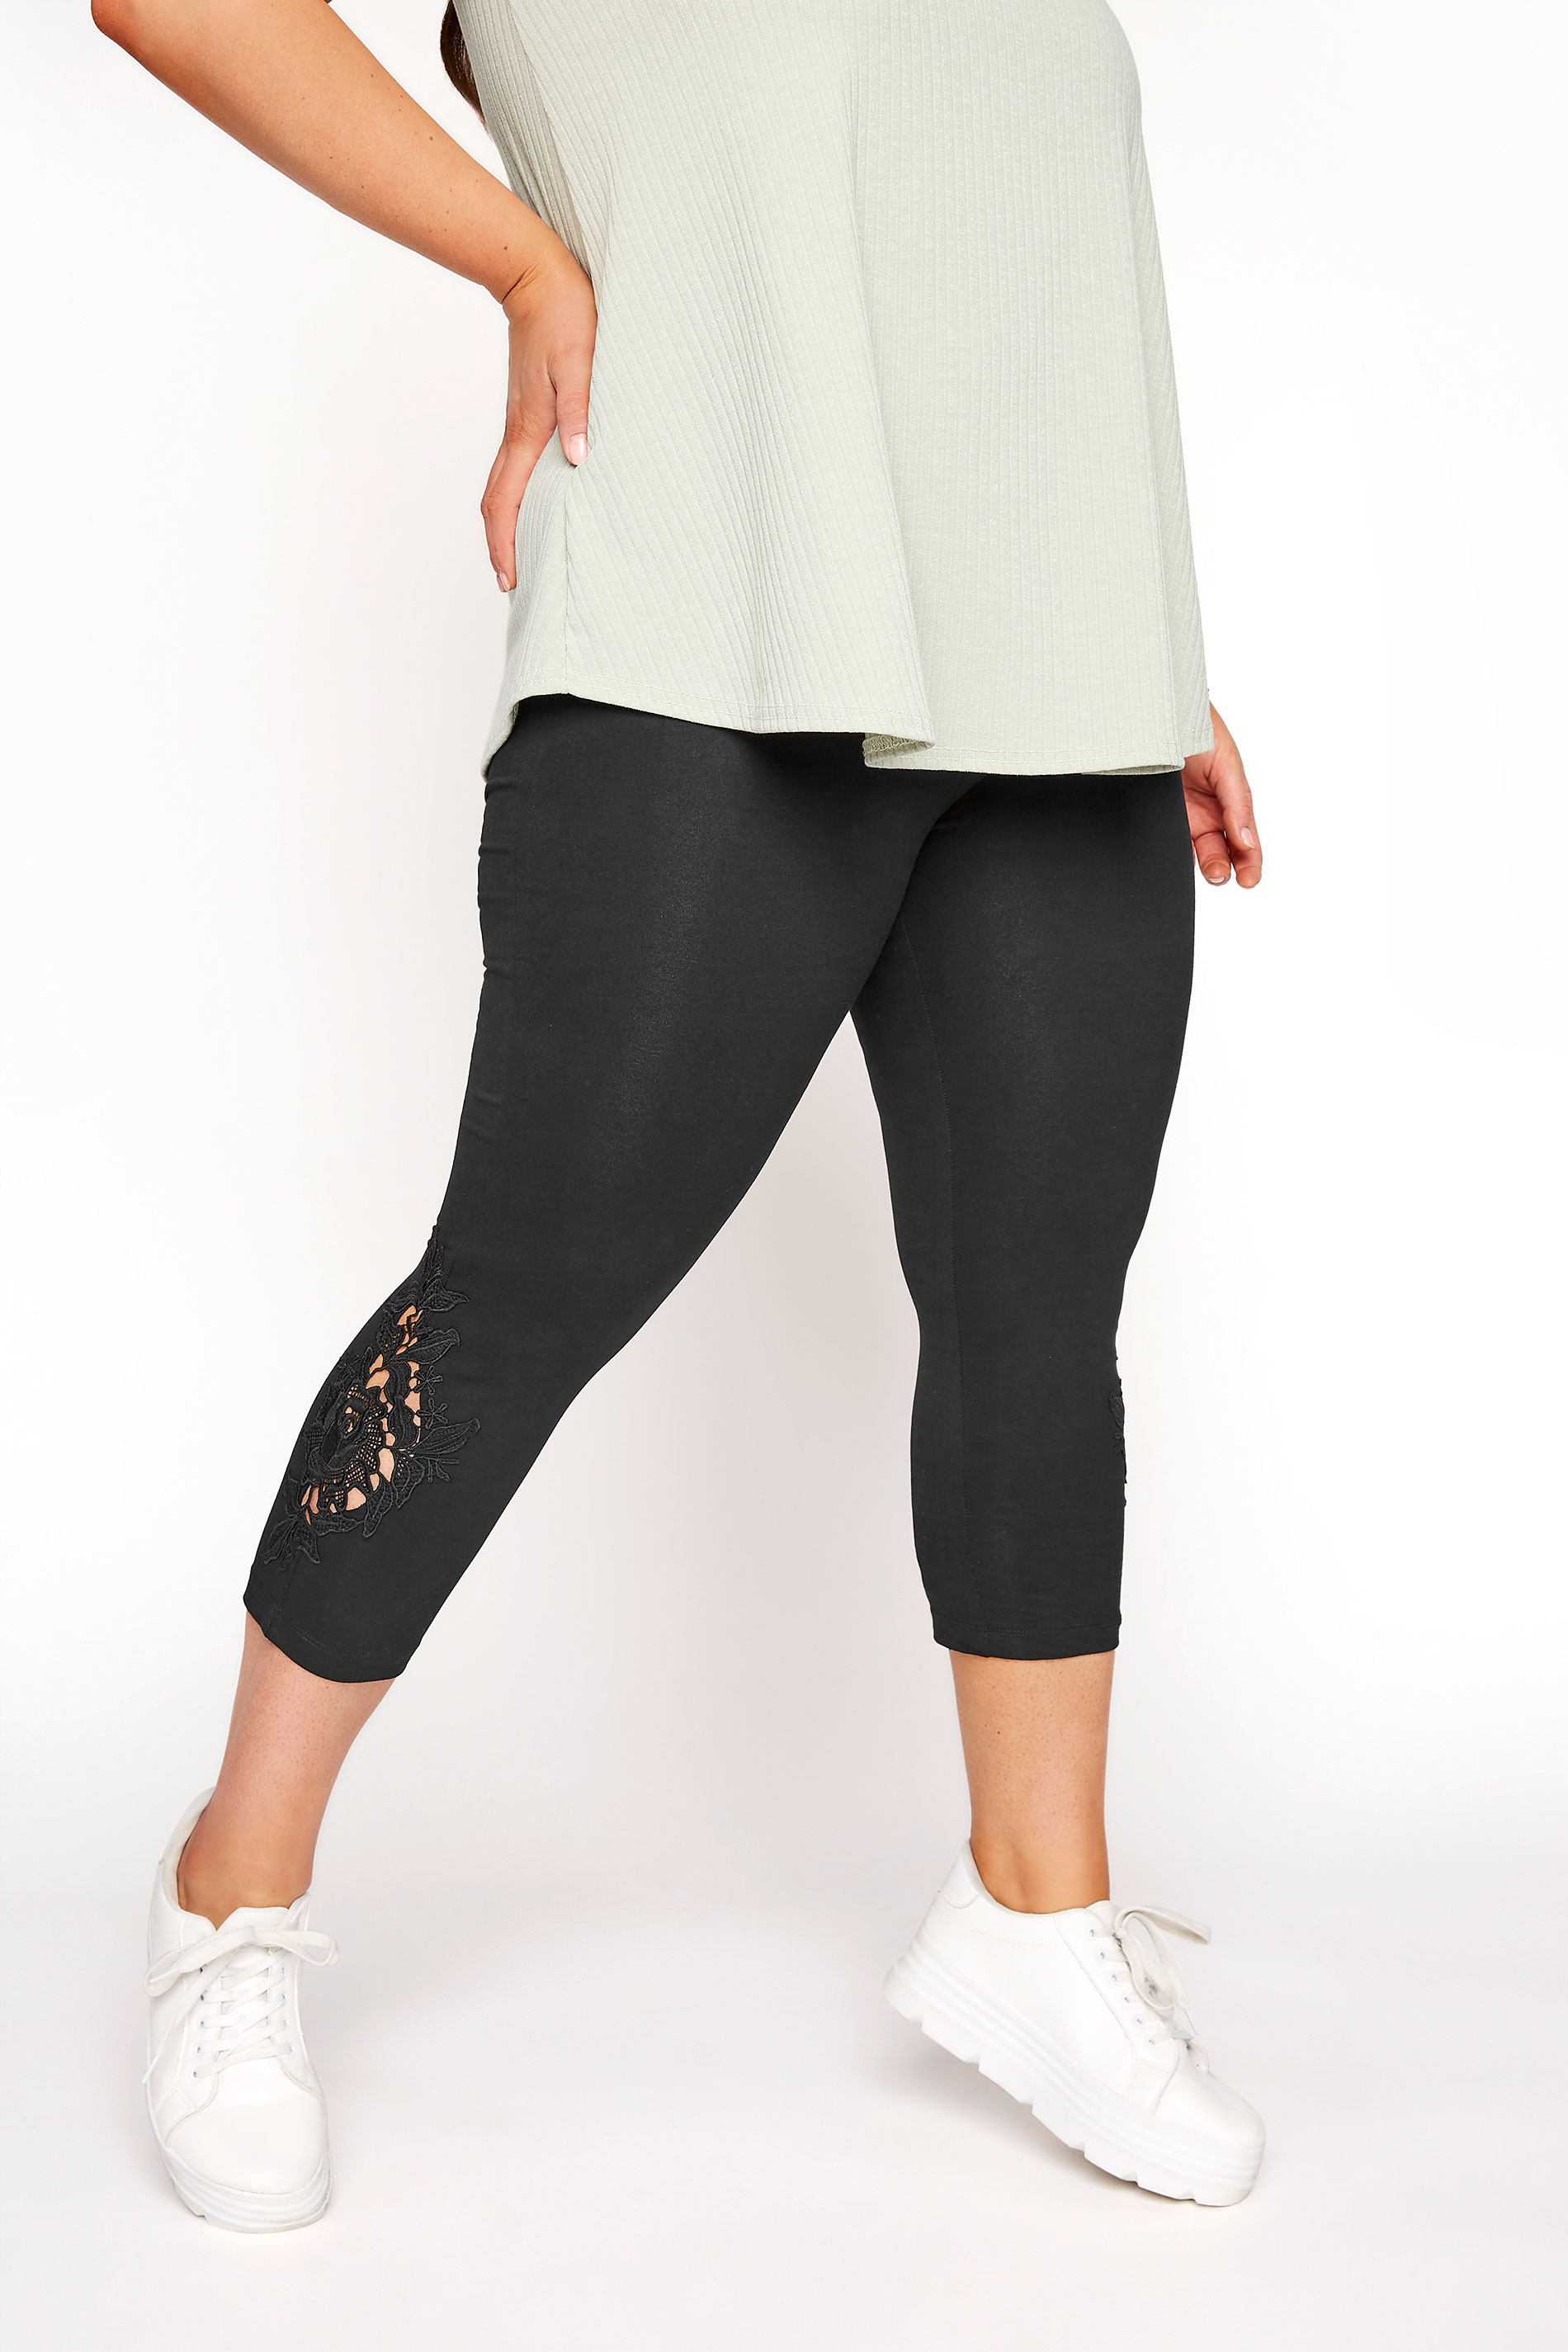 Buy Kotii Women's Plus Size Lace Trim Capri Leggings Cropped Leggings  Stretch Tights Pants Black at